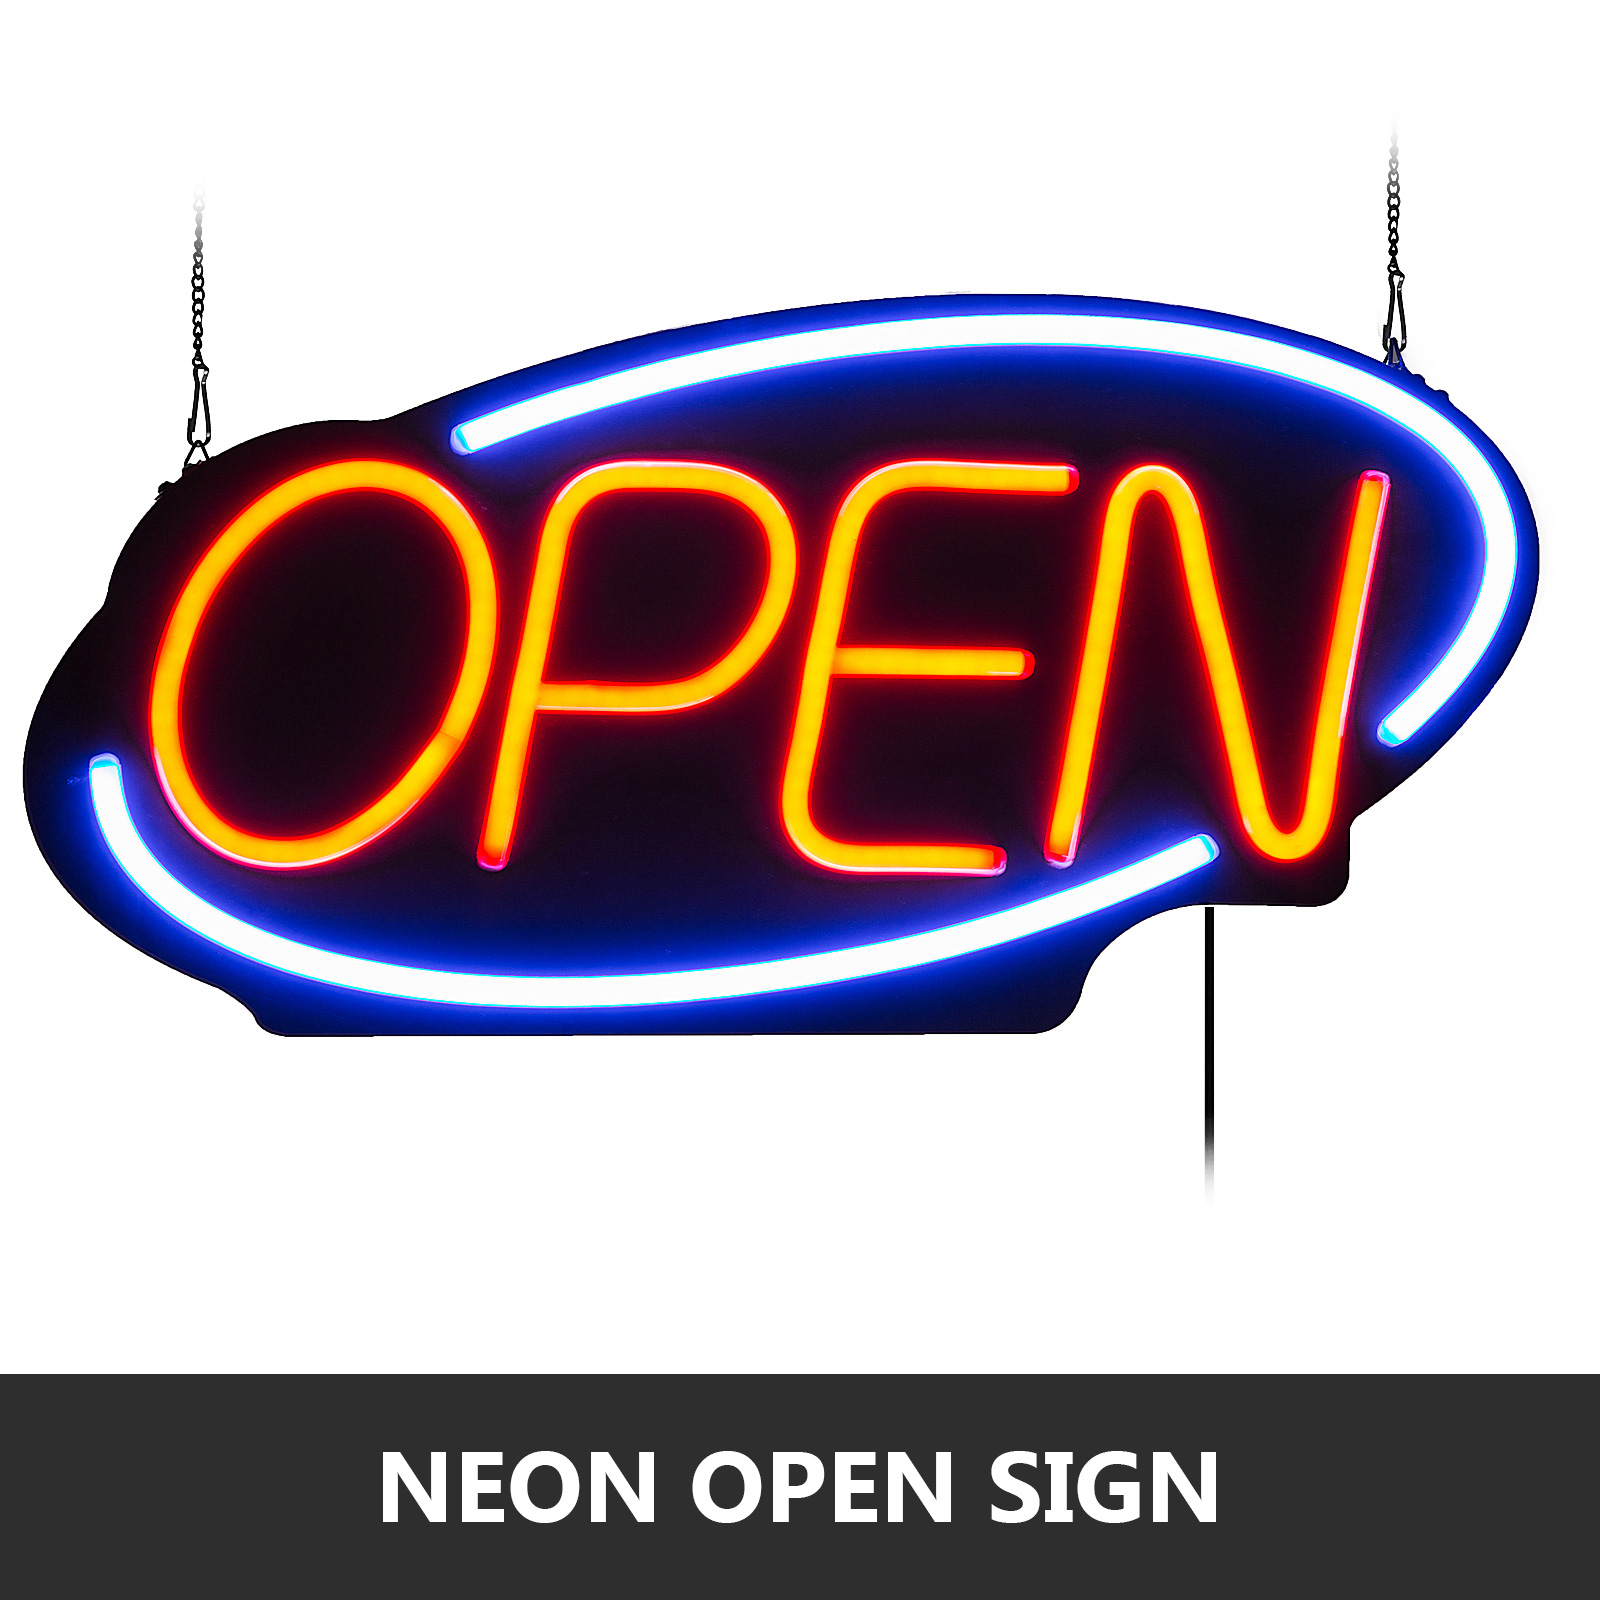 i011-b OPEN Cafe Restaurant Business Neon Light Sign 